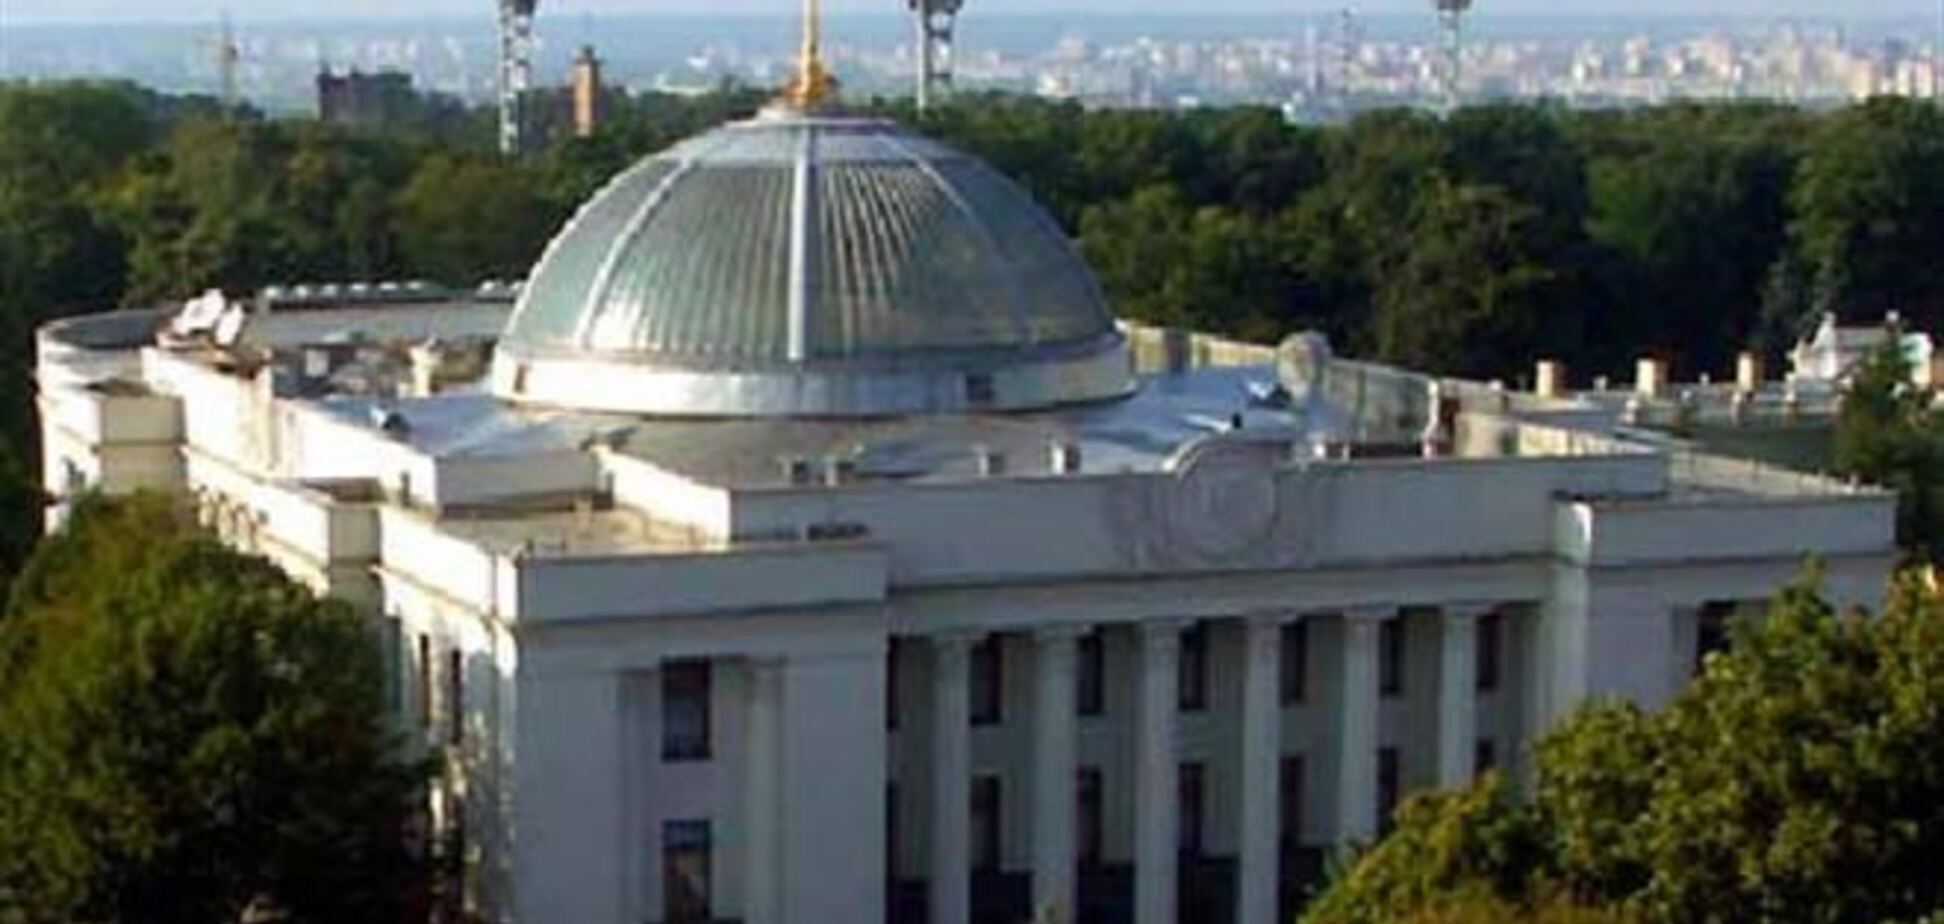 Третий вариант 'закона Тимошенко' разрешает лечение заключенных за границей без отбывания наказания